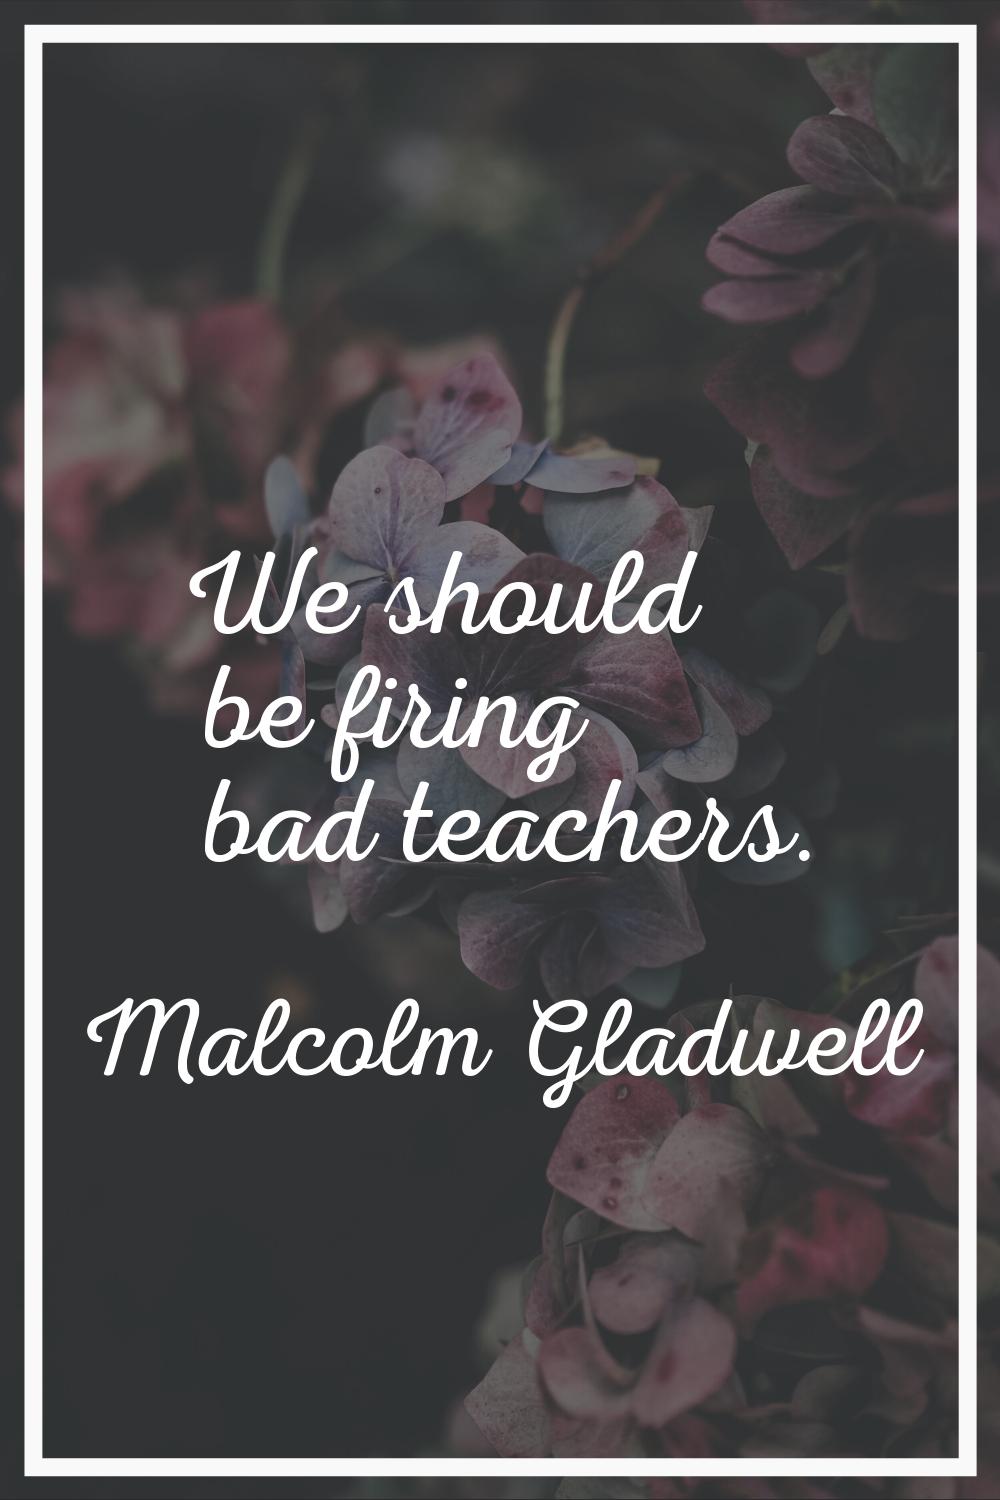 We should be firing bad teachers.